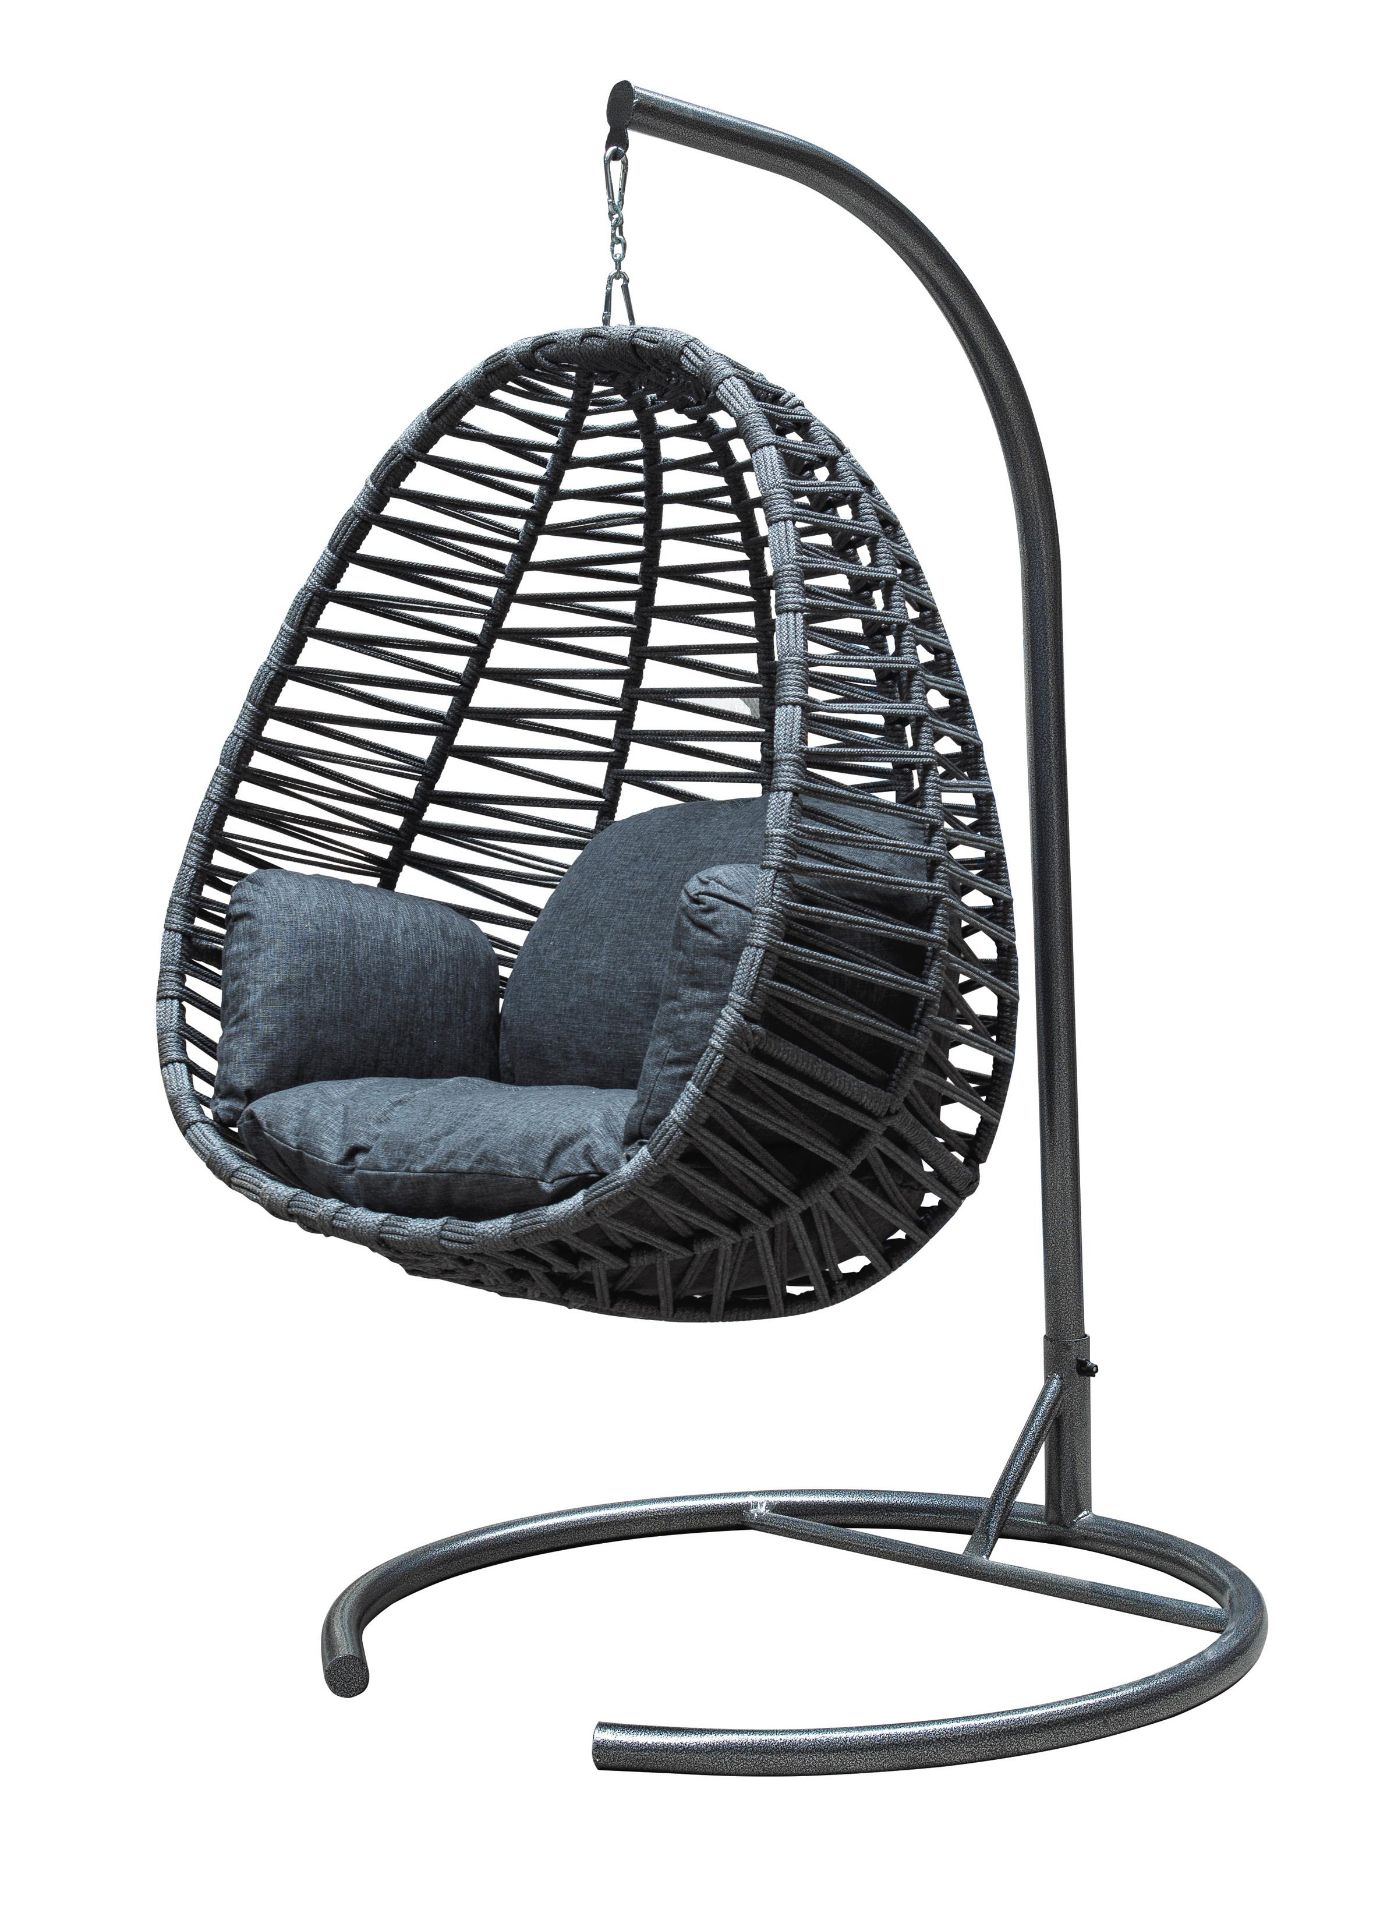 + VAT Brand New SRP £229.99 The Chelsea Garden Co Weaved Hanging Egg Chair With Luxury Padded